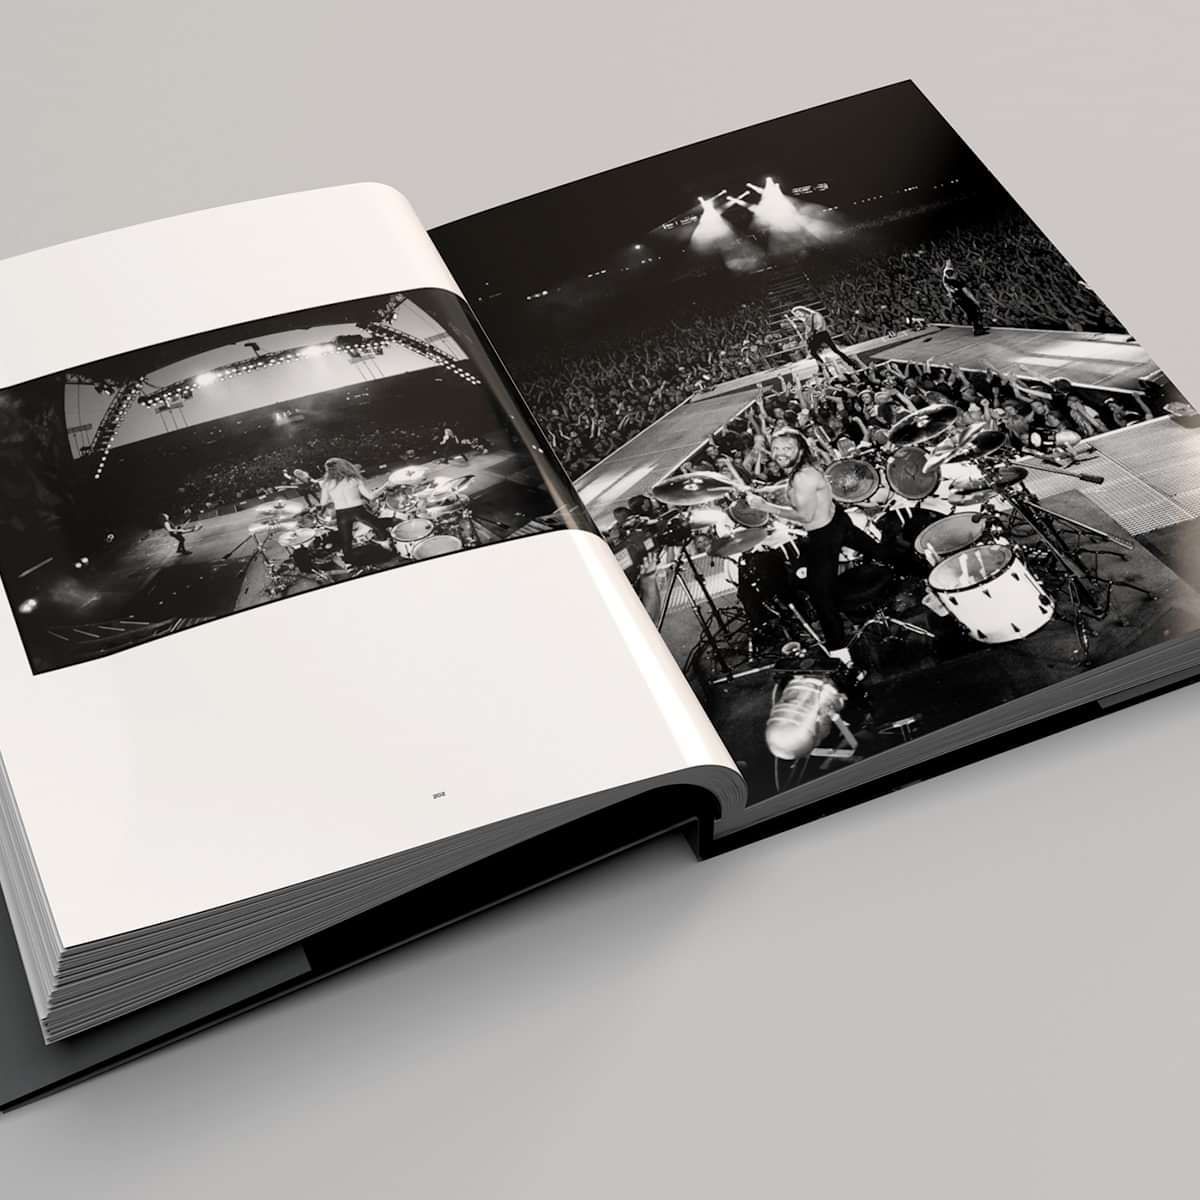 Metallica: The Black Album in Black & White Book by Ross Halfin